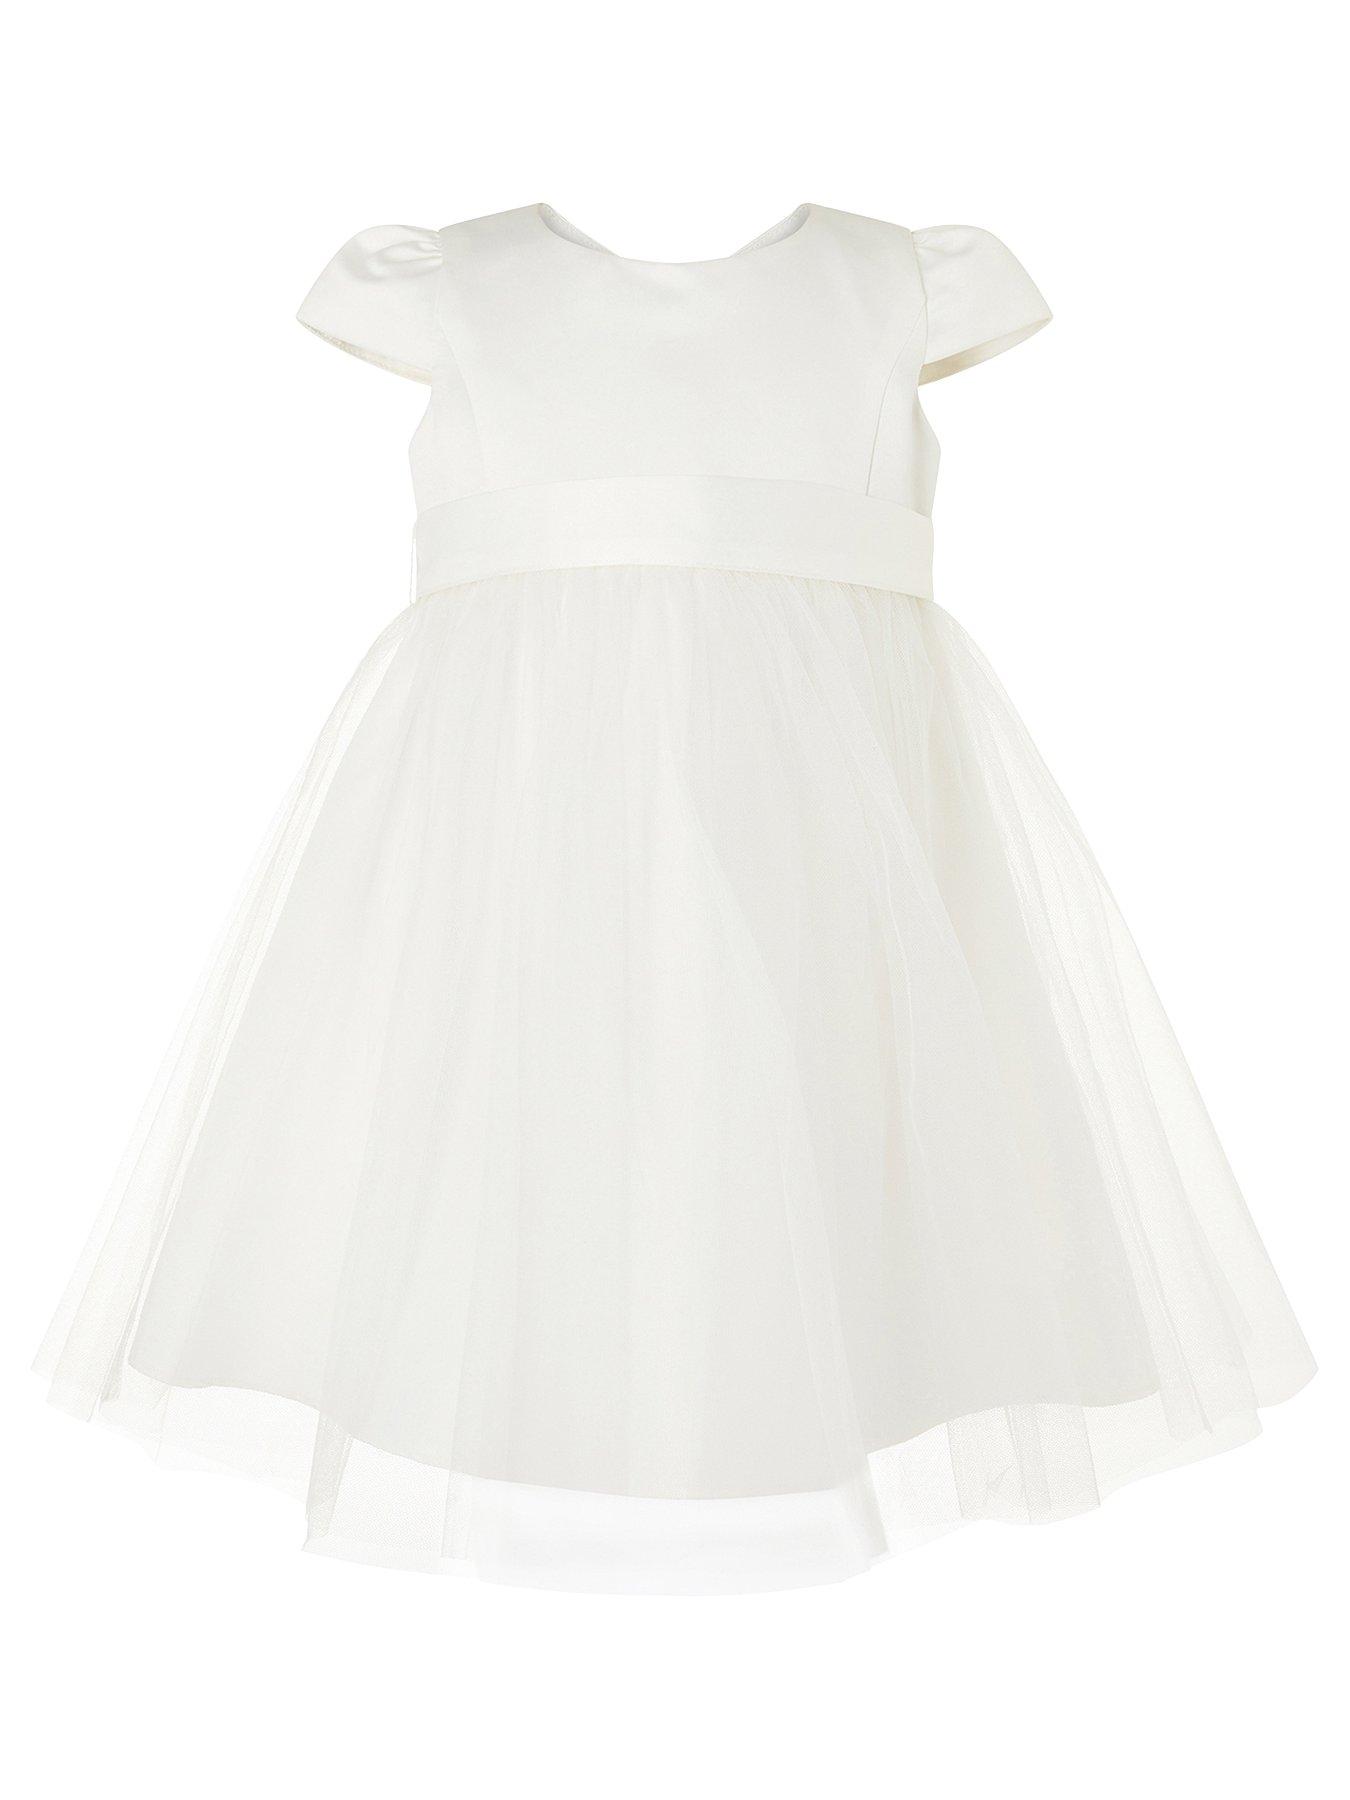  Baby Girls Tulle Bridesmaid Dress - Ivory